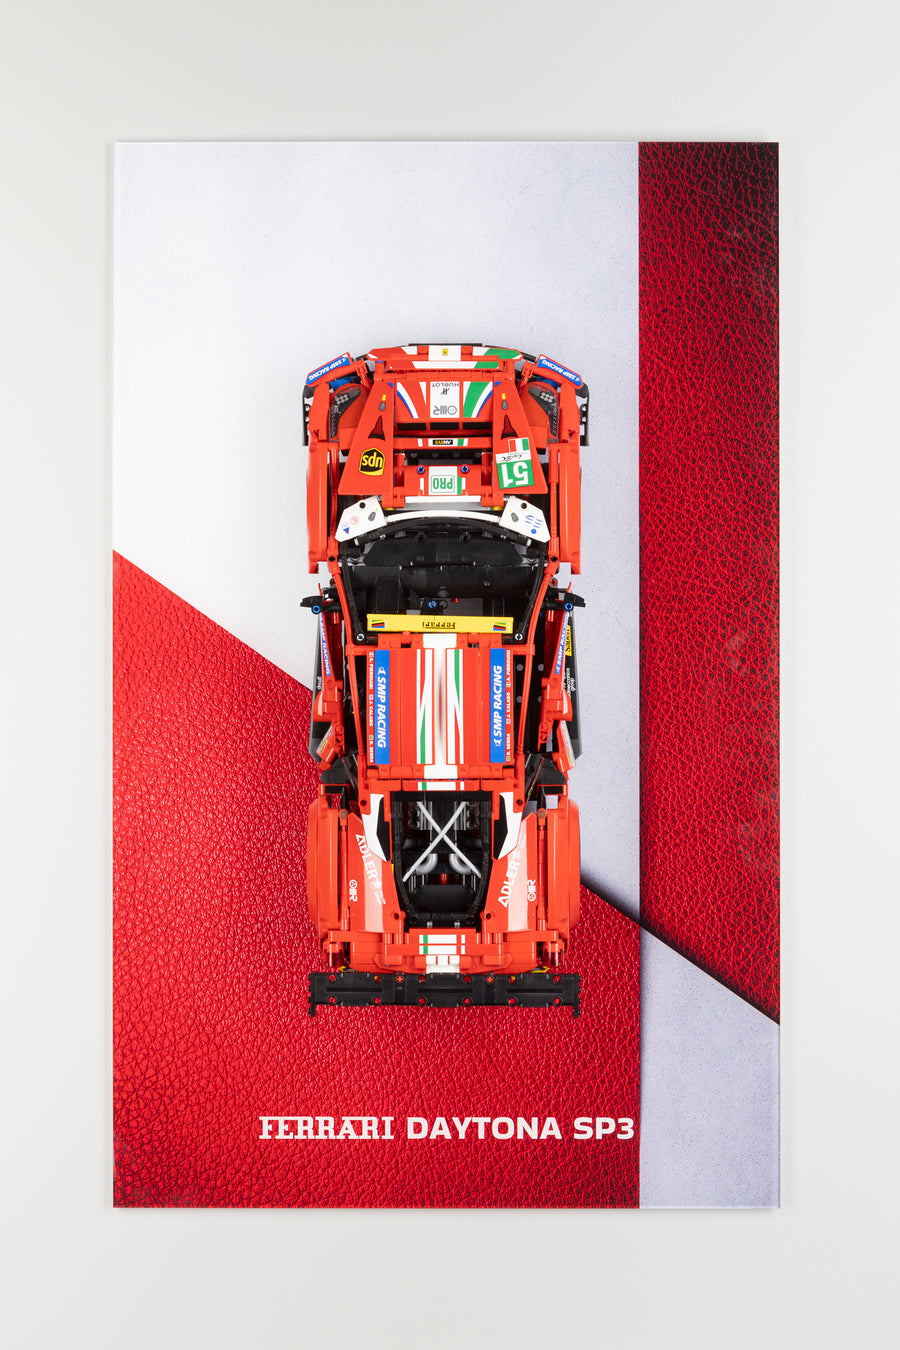 Wall Hanging Car Frame - Ferrari Daytona SP3 (42143)